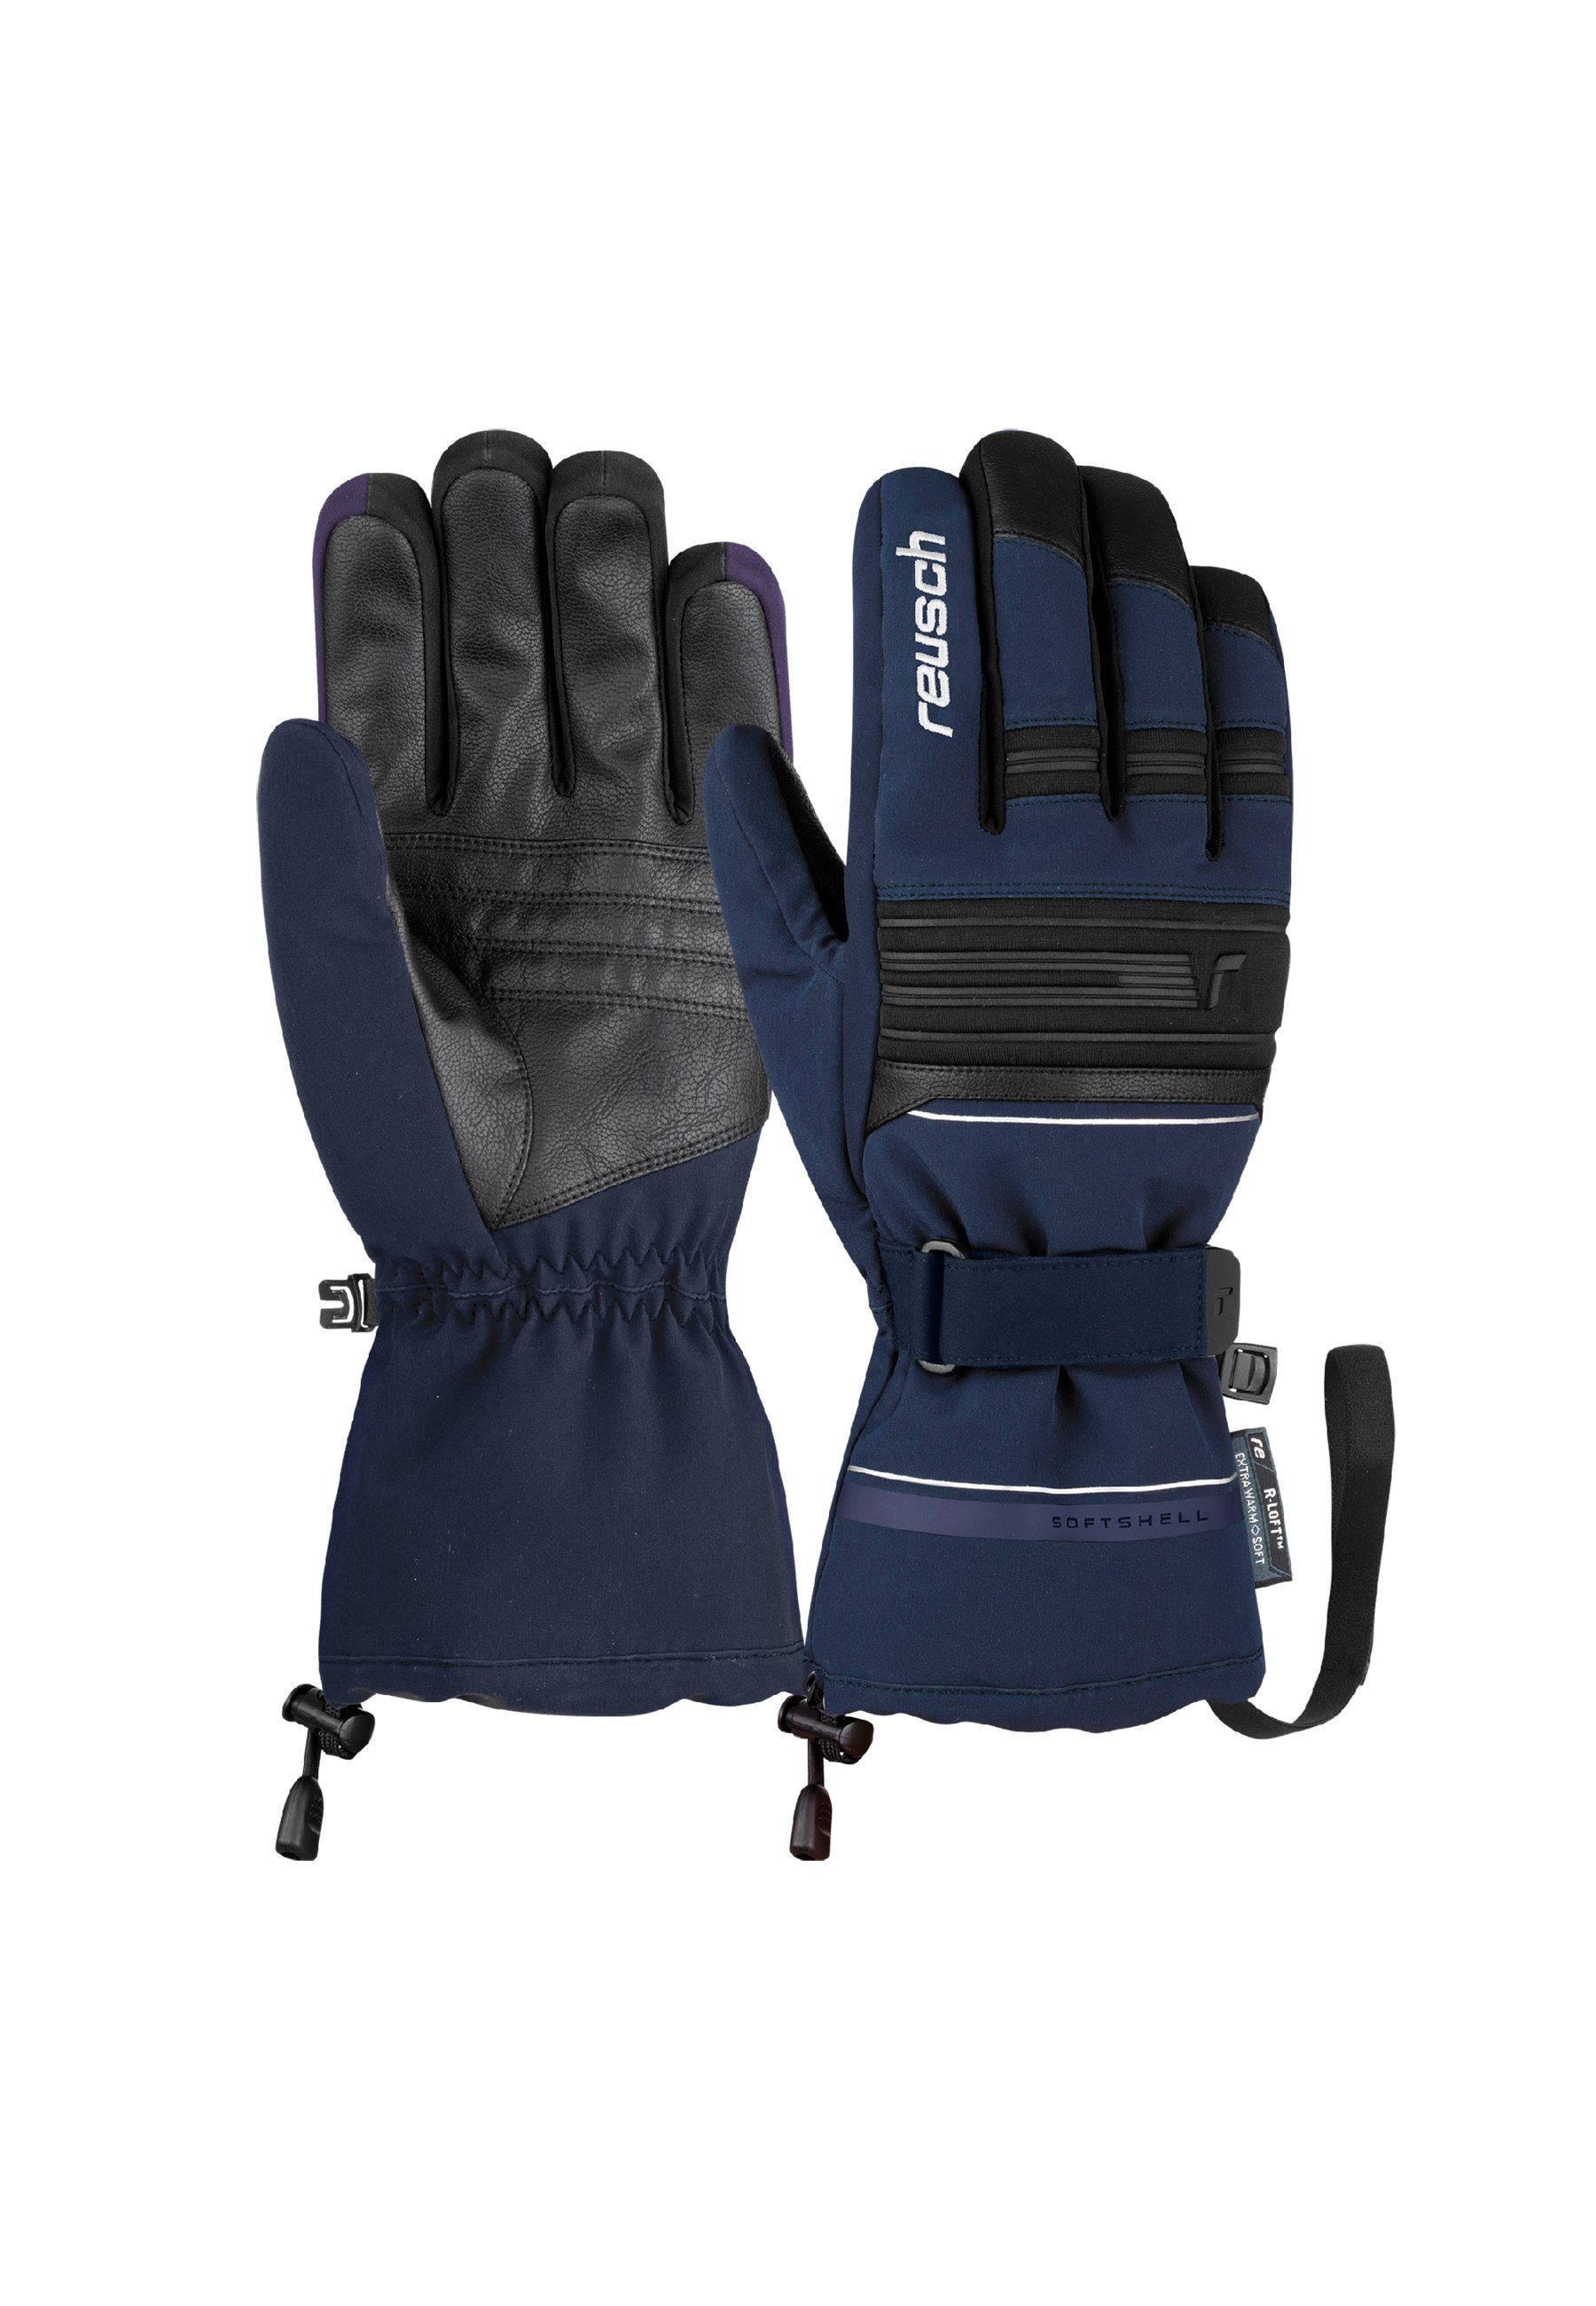 Design R-TEX® XT und Reusch blau-schwarz in Kondor wasserdichtem atmungsaktivem Skihandschuhe